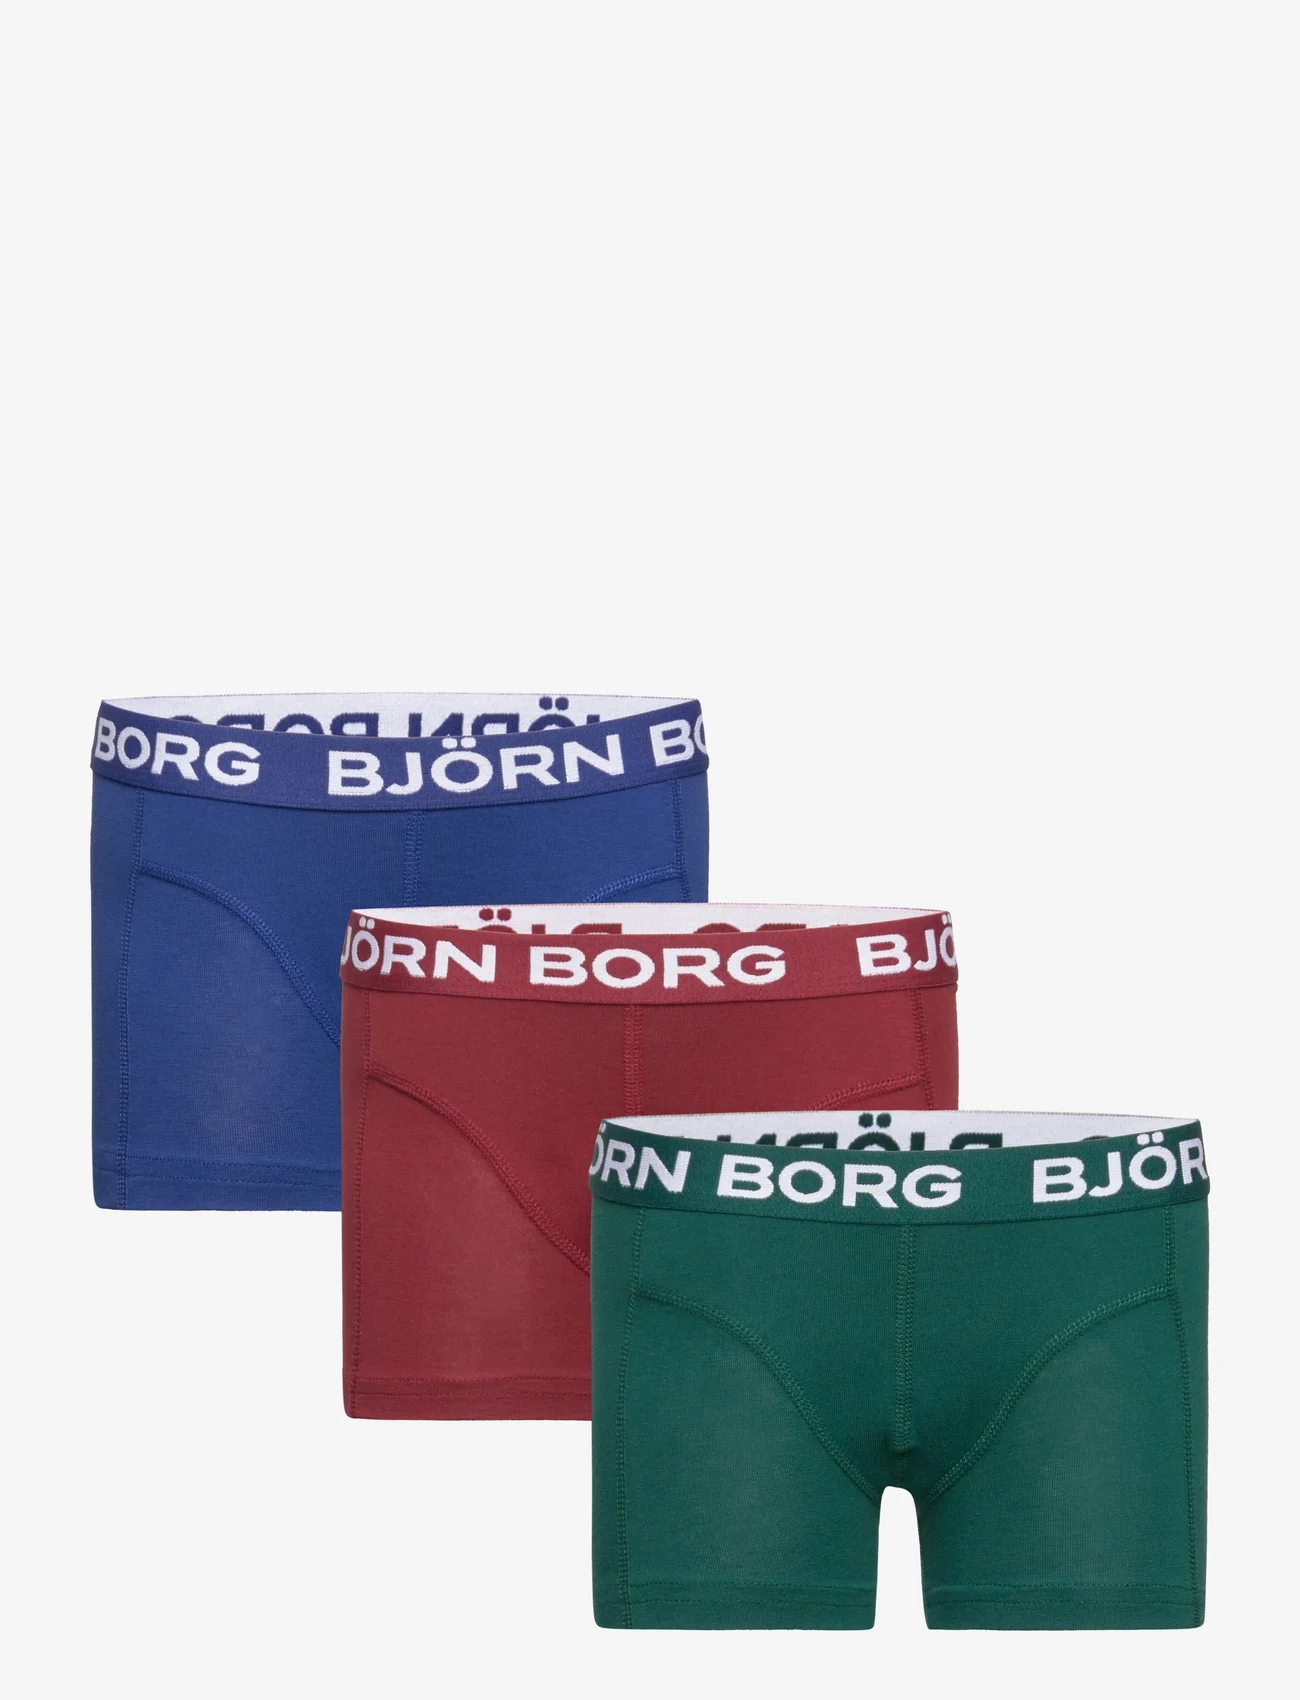 Björn Borg - CORE BOXER 3p - underpants - multipack 1 - 0